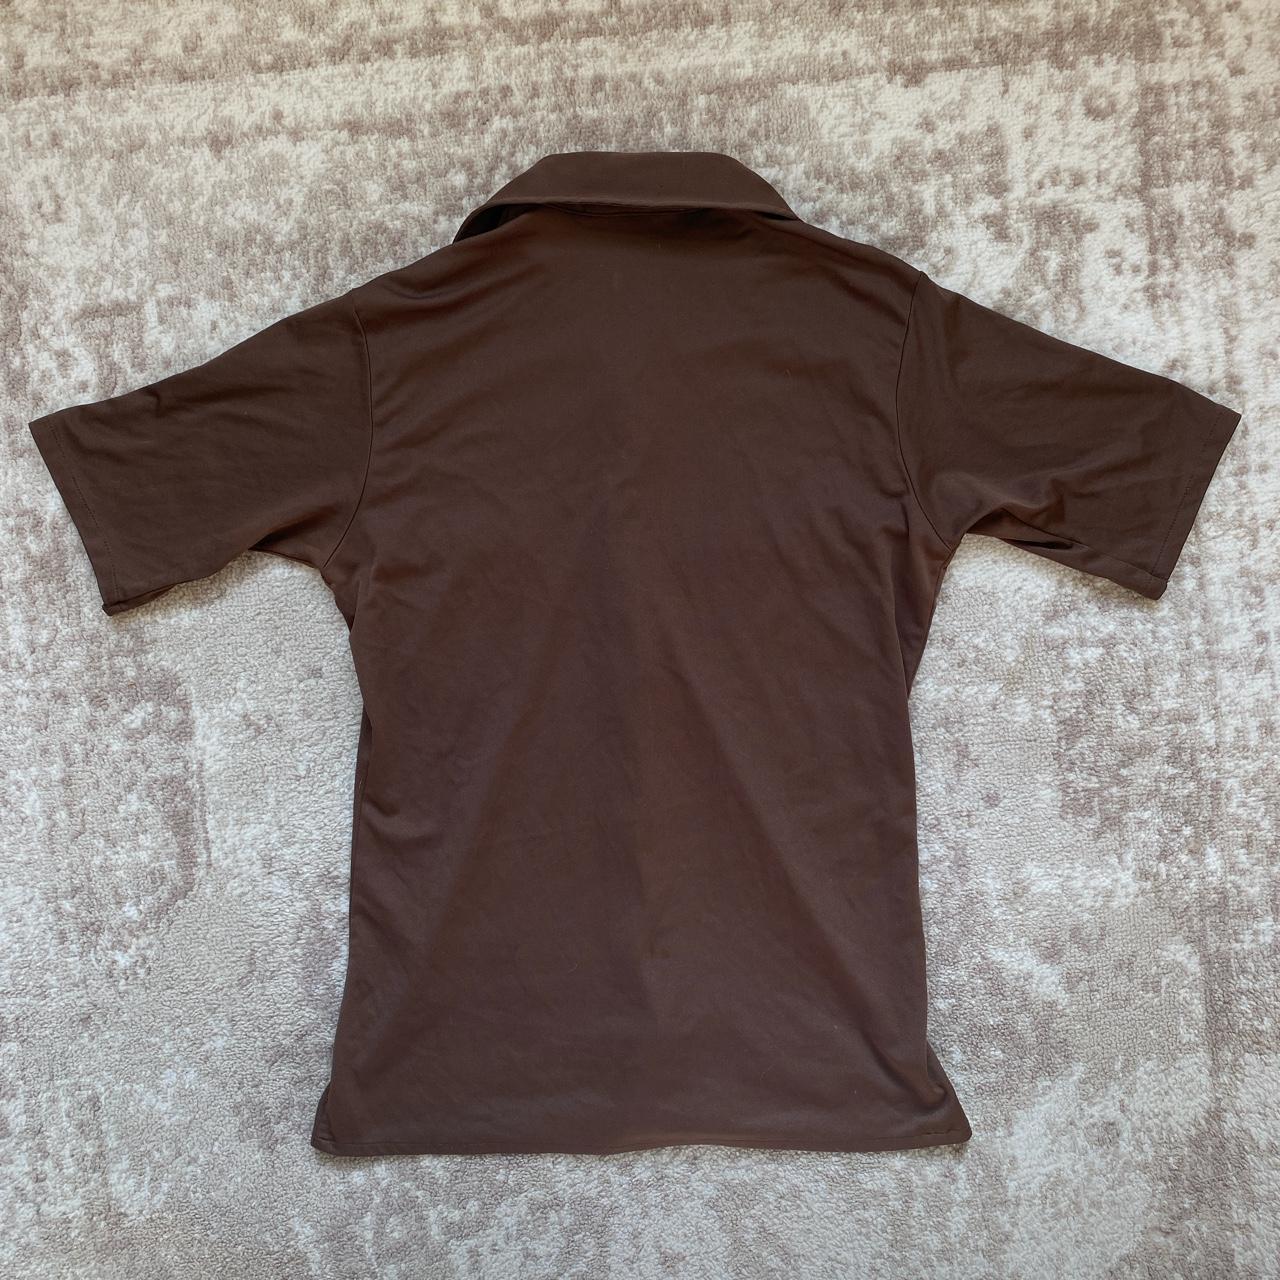 JCPenney Men's Brown and Cream Shirt | Depop